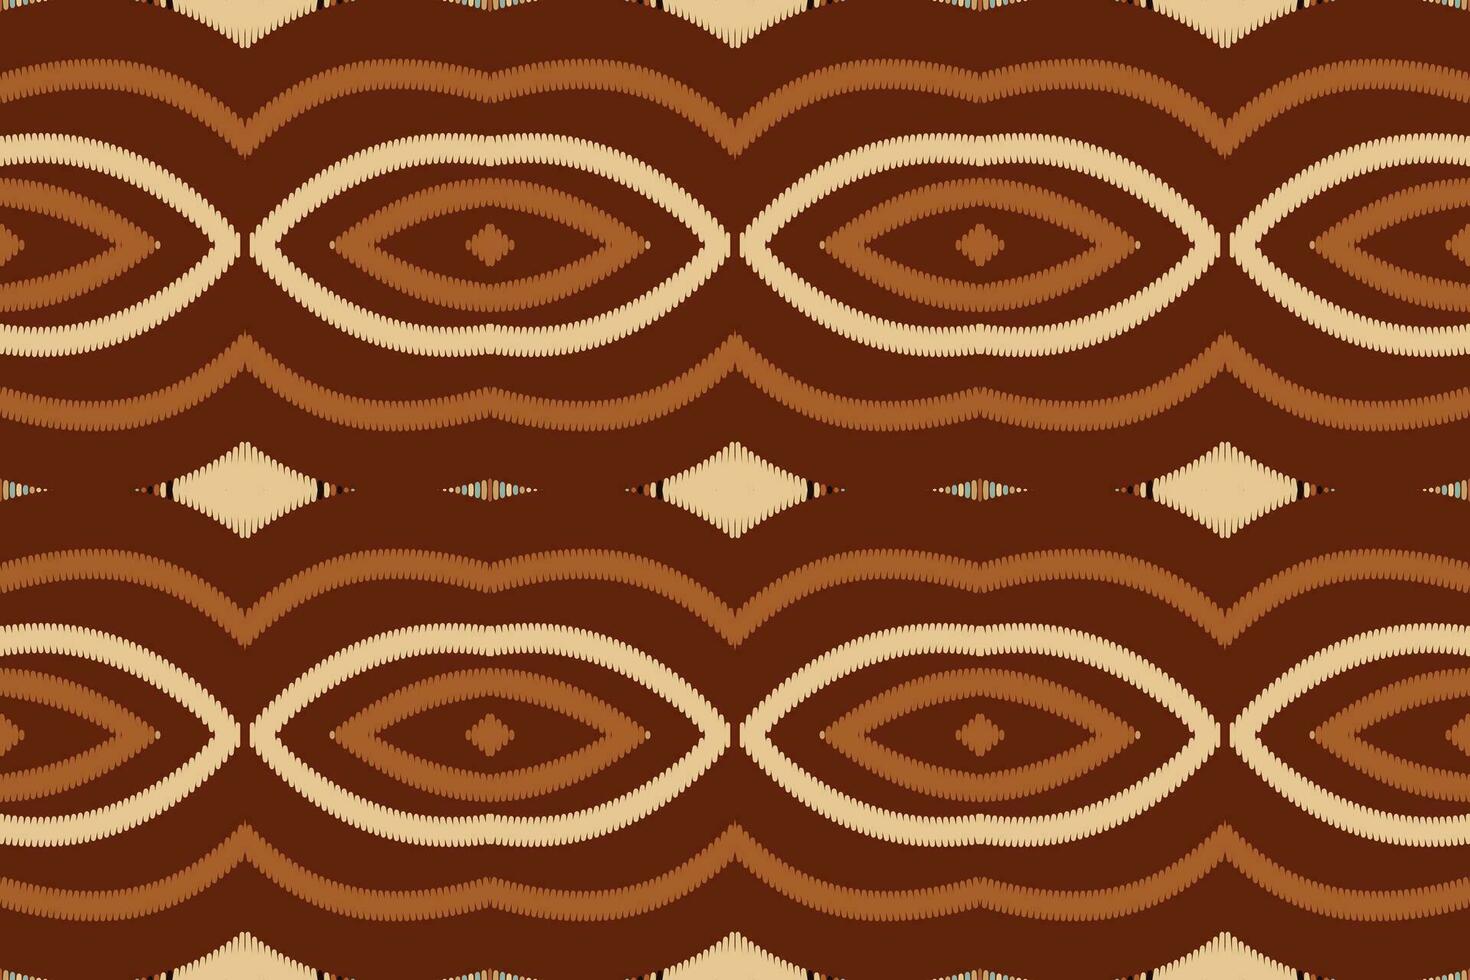 ikat damasco bordado antecedentes. ikat diseño geométrico étnico oriental modelo tradicional. ikat azteca estilo resumen diseño para impresión textura,tela,sari,sari,alfombra. vector